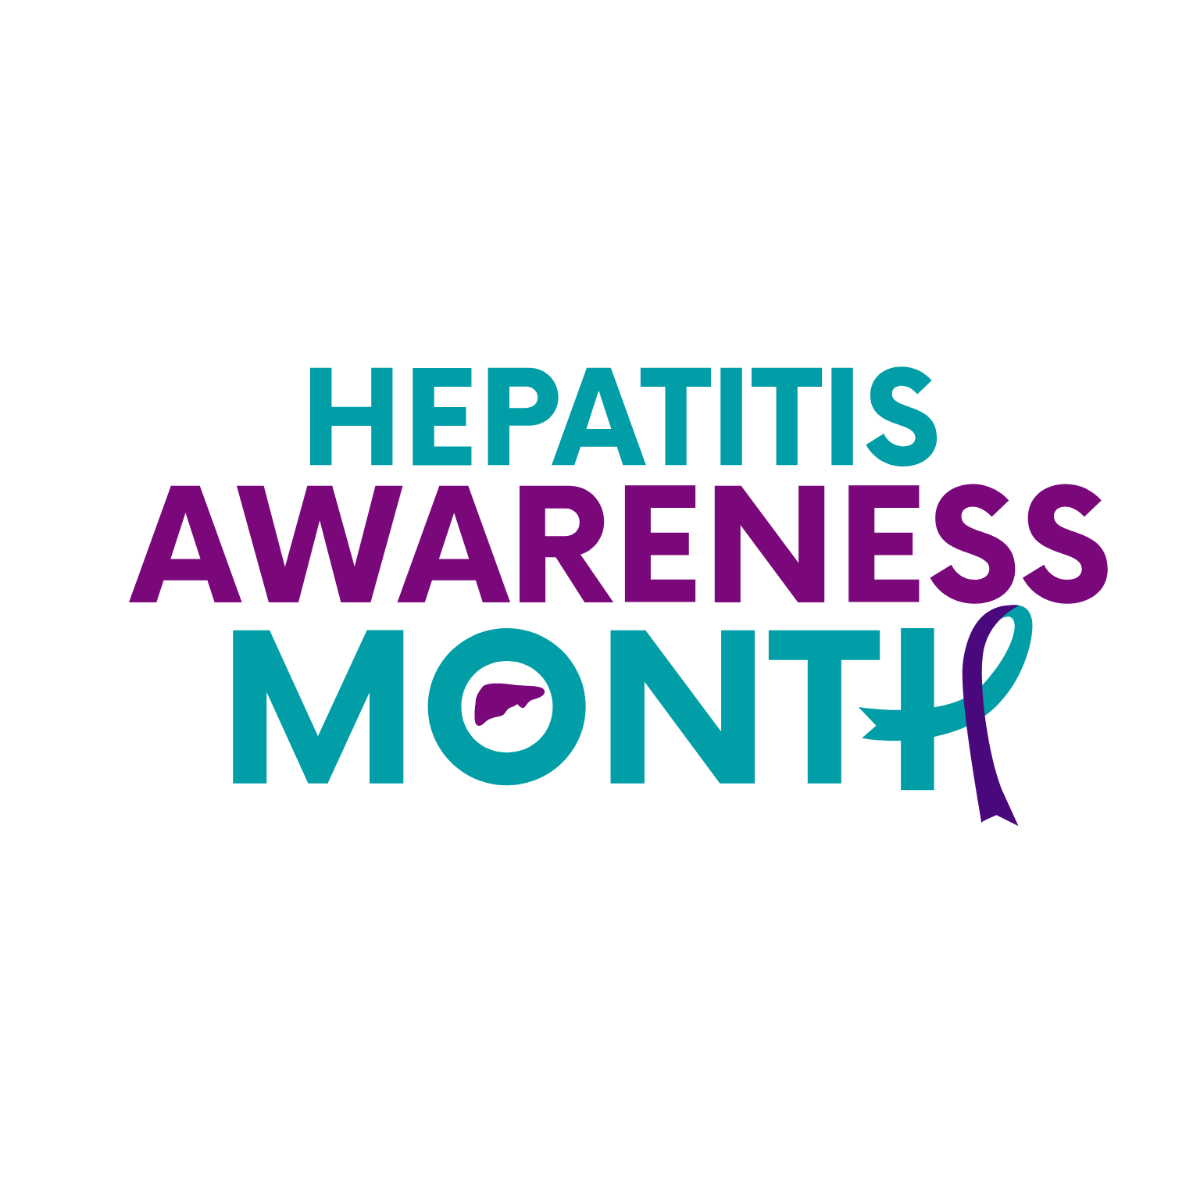 Hepatitis Awareness Month Text Effect Template